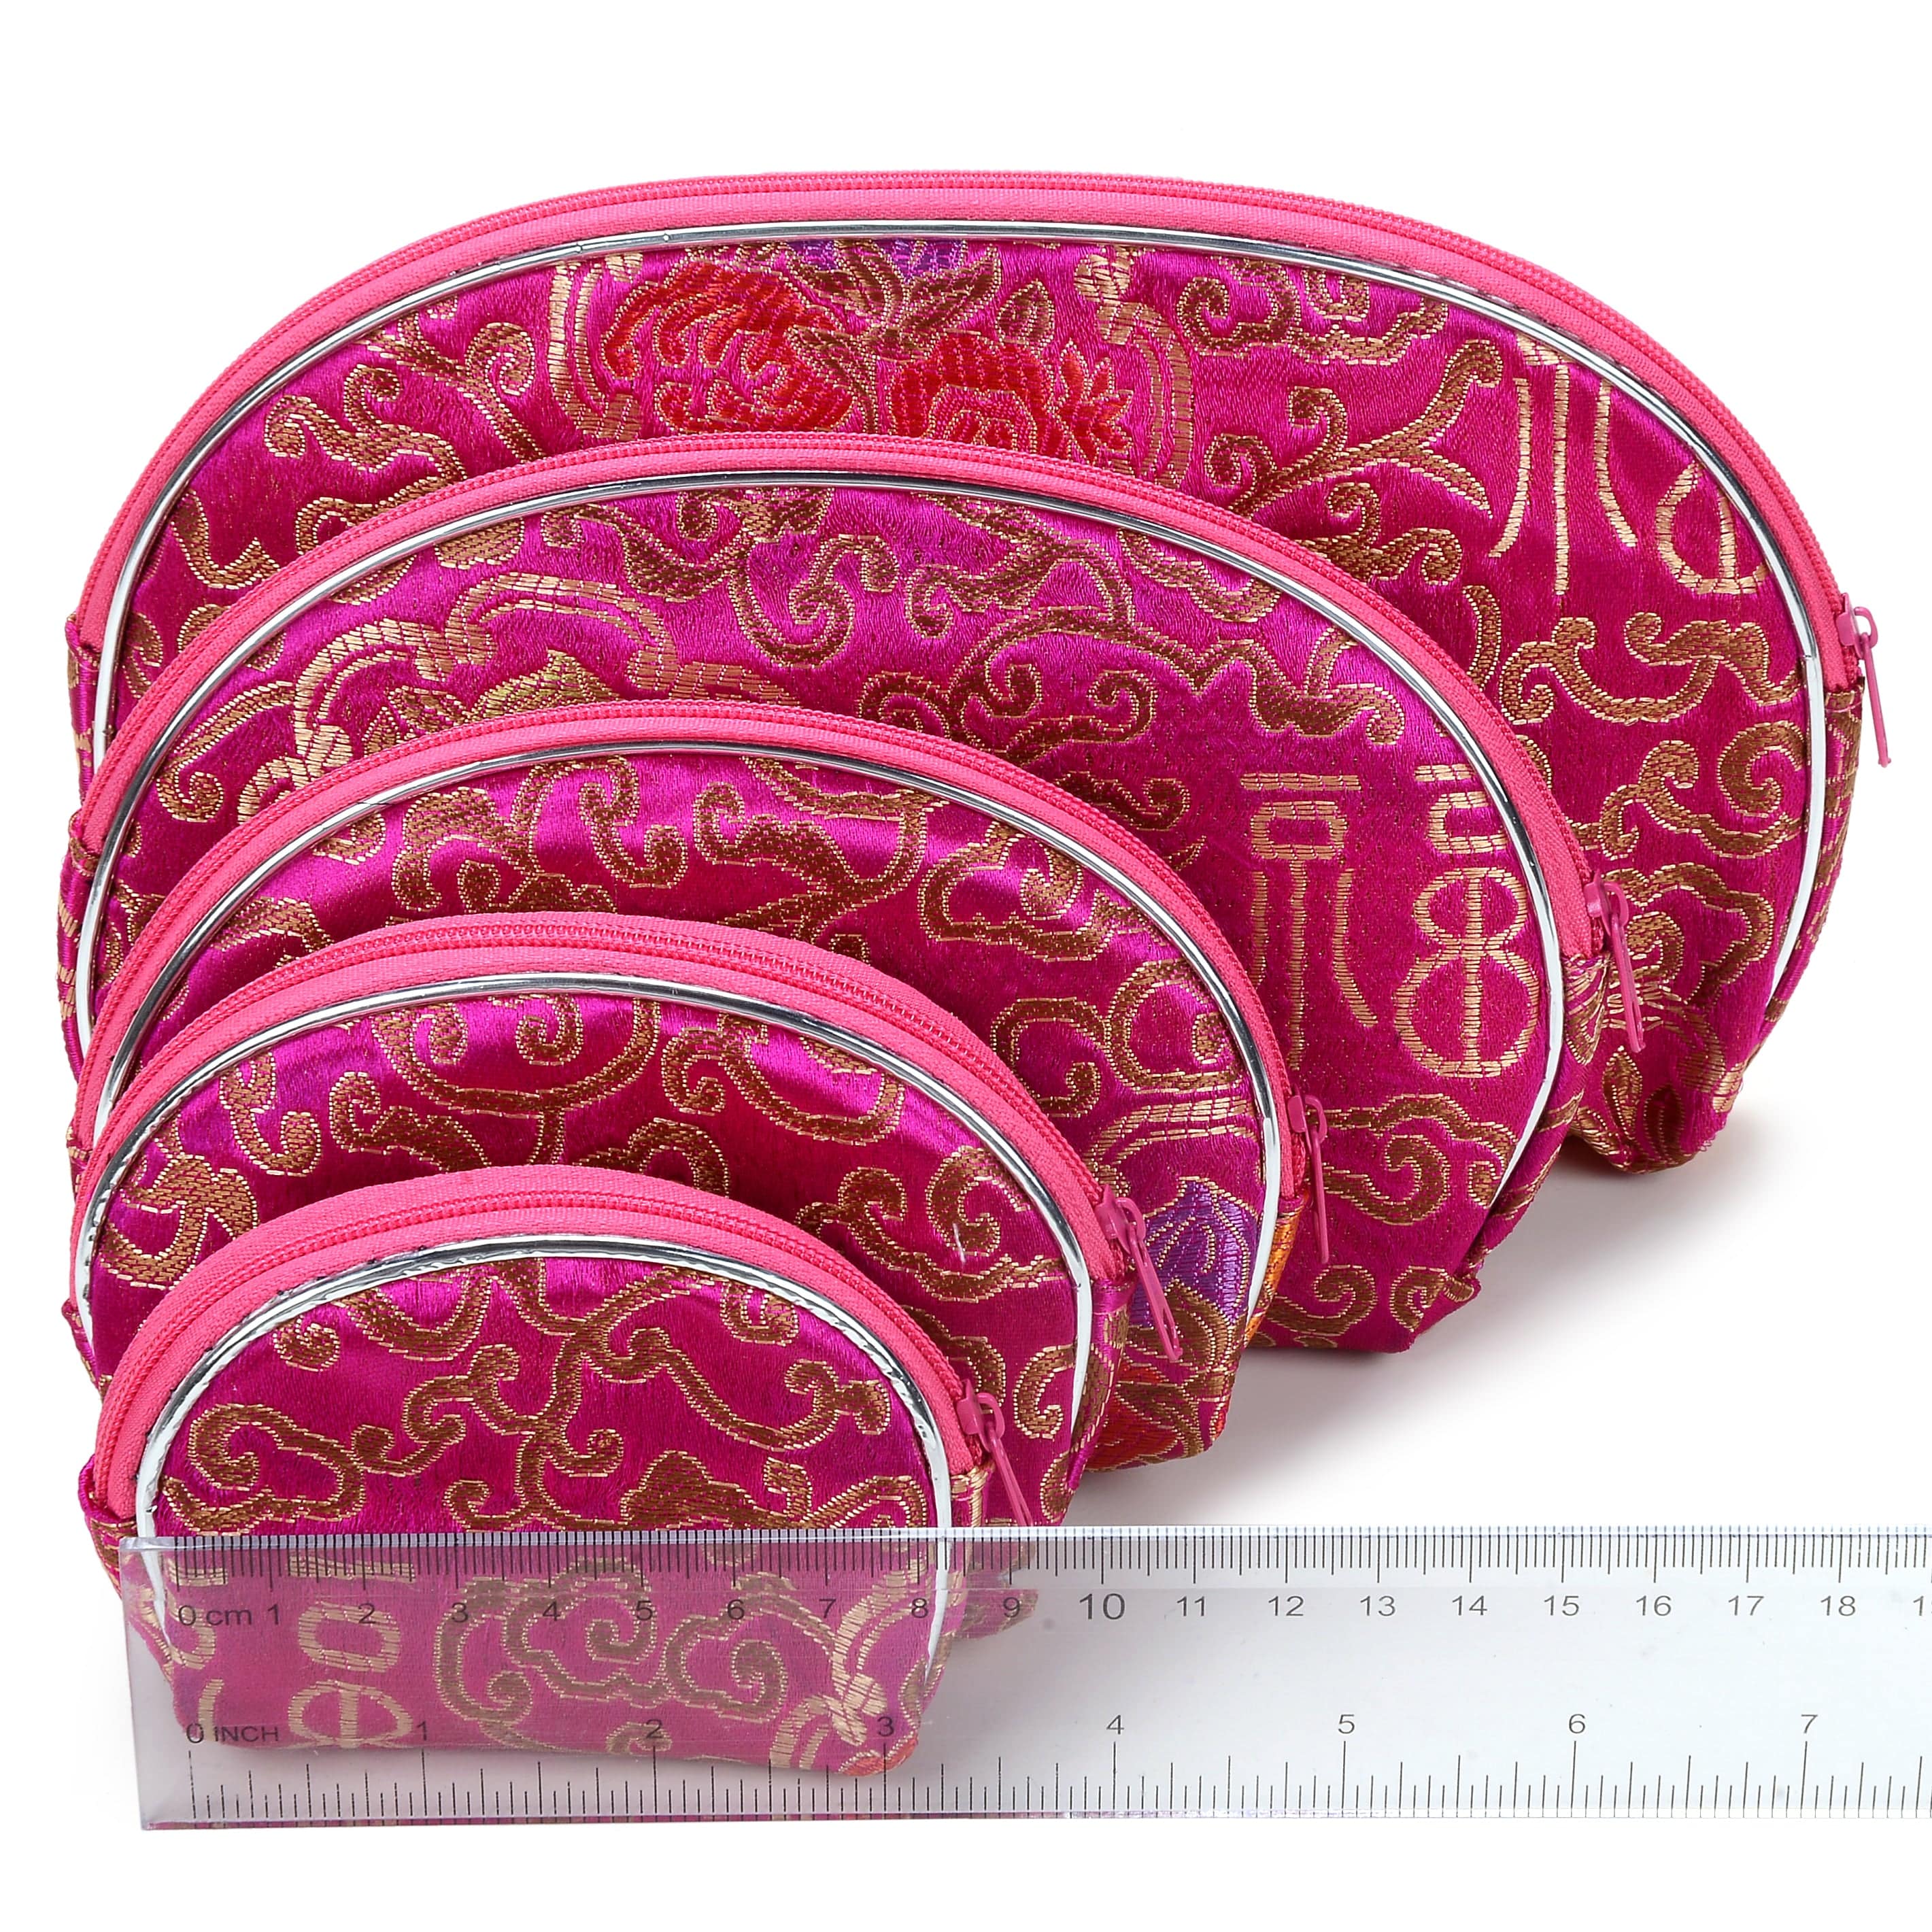 Kalifano JEWELRY POUCHES Pink Silk Pouch - 5 piece set POUCH5-PK